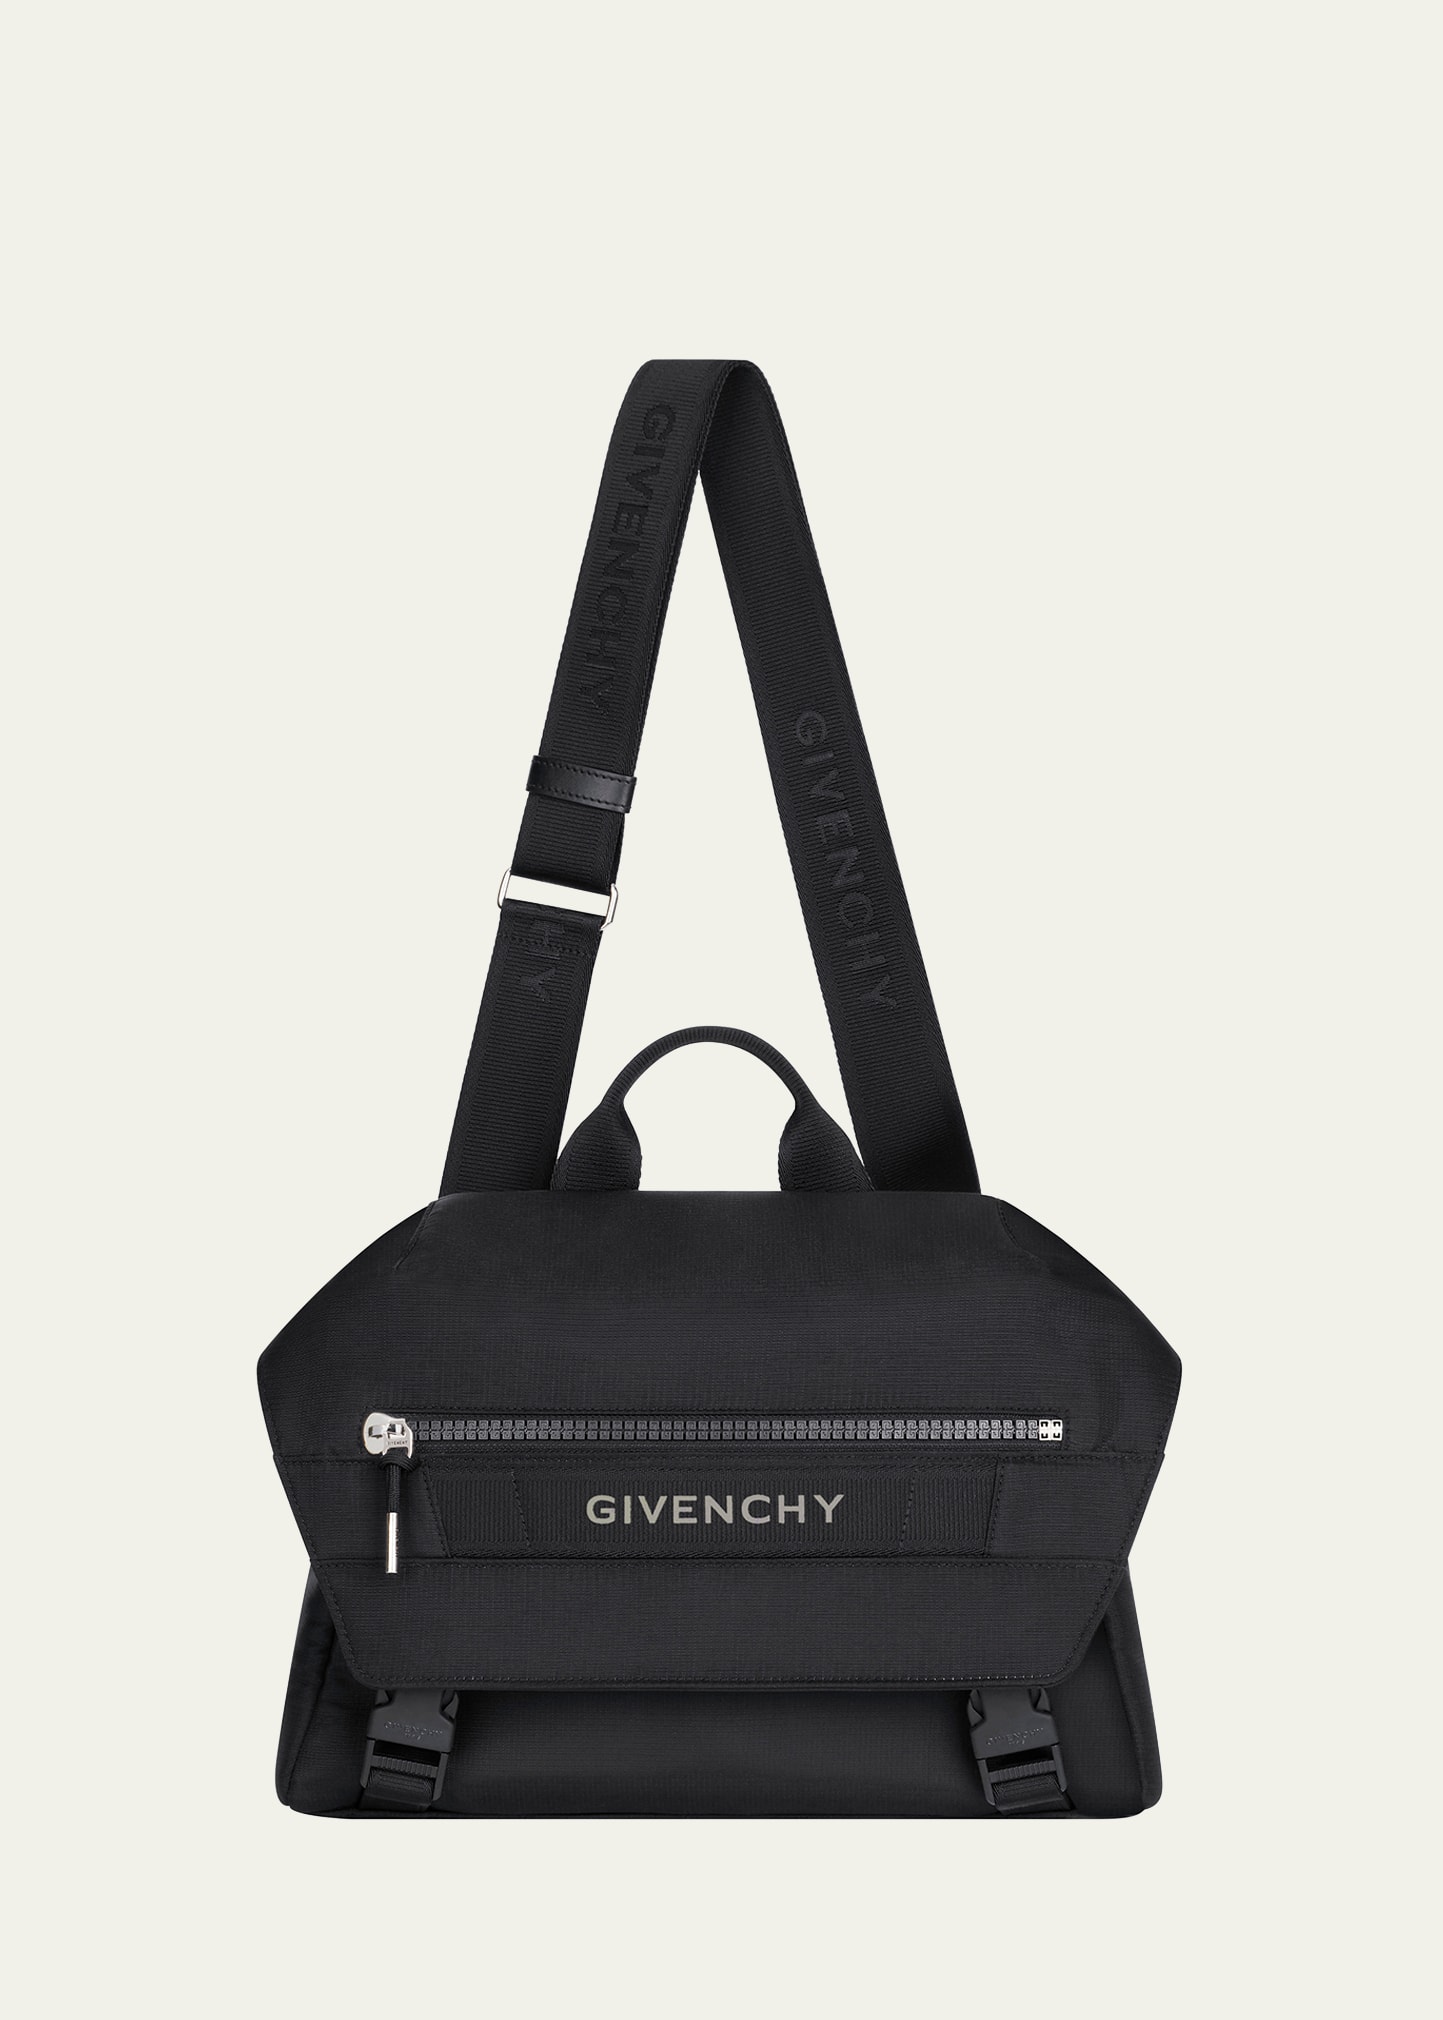 Givenchy Men's Pandora Small Crossbody Bag